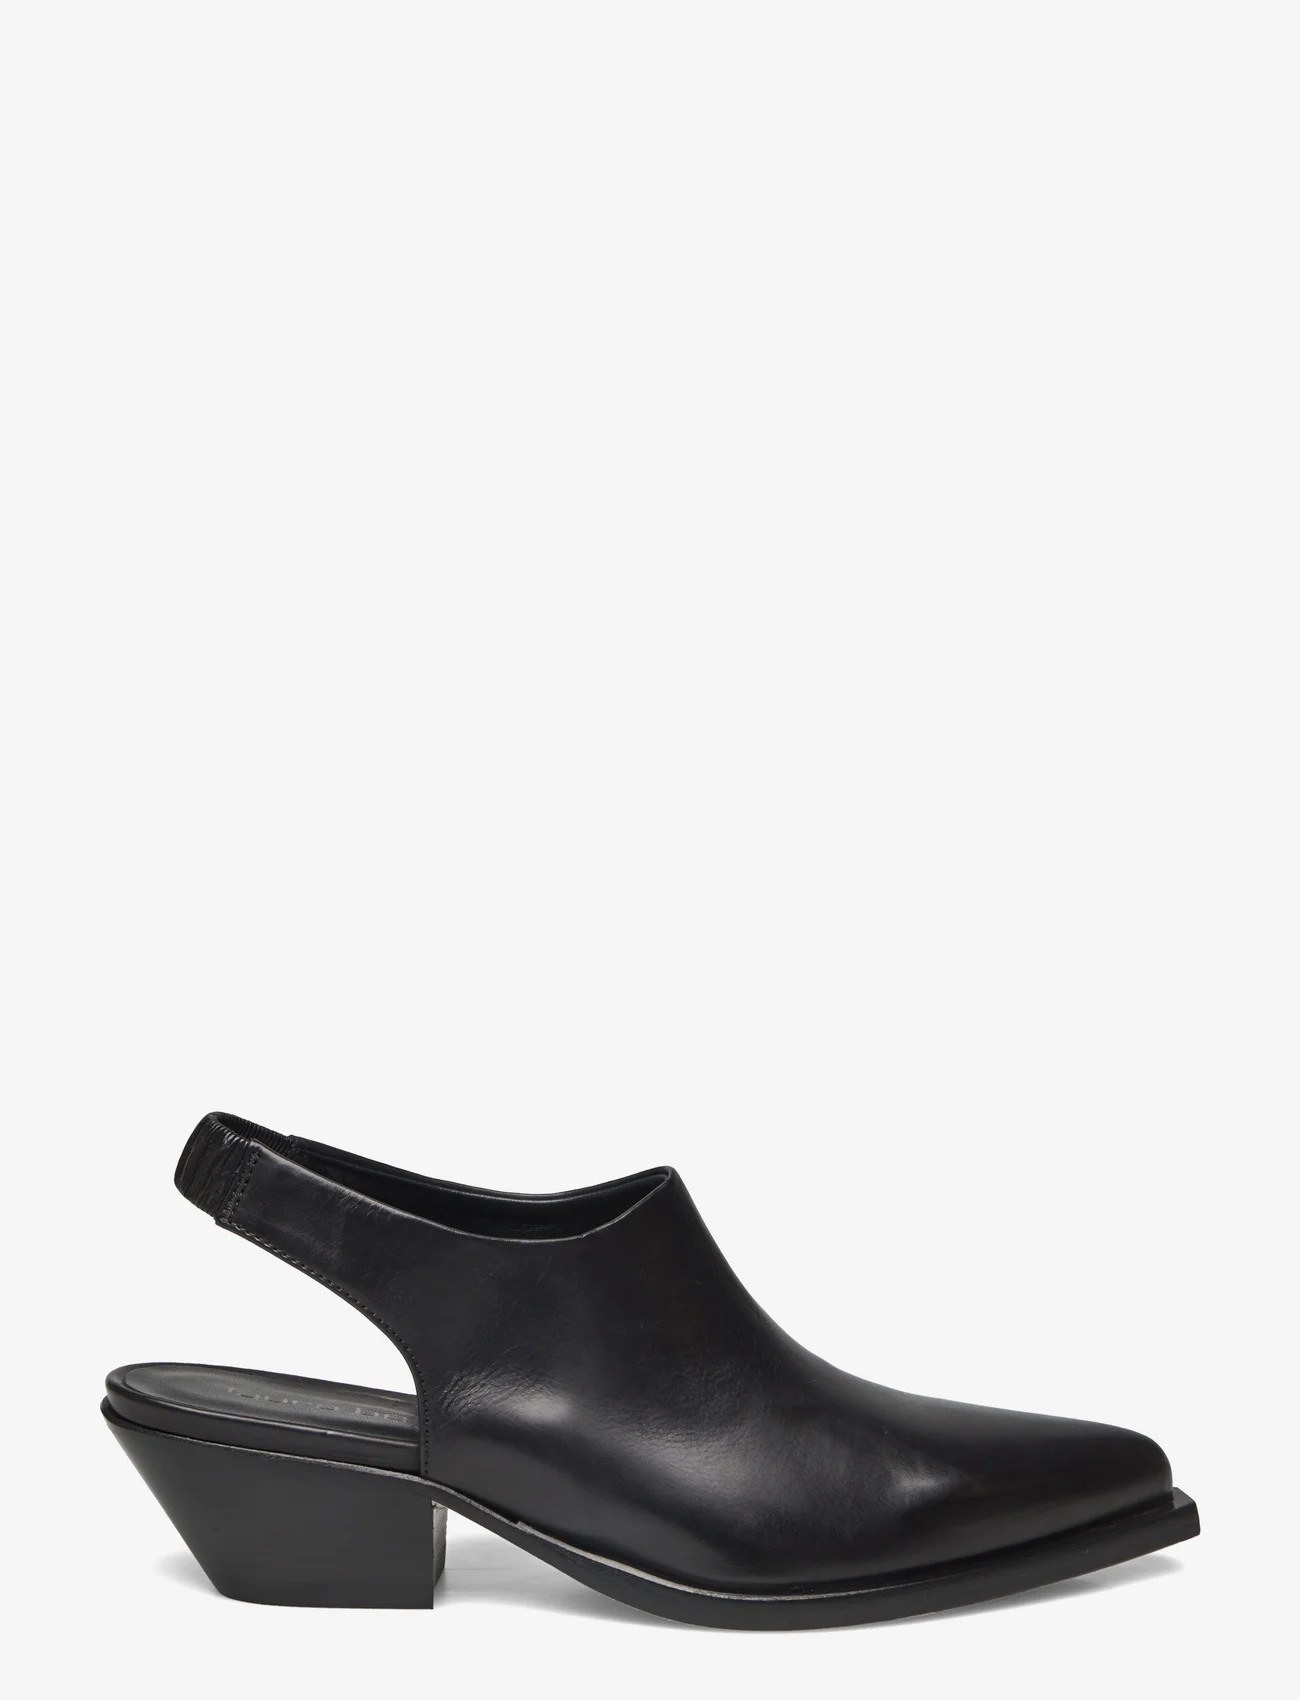 Laura Bellariva - shoes - slingbacks med hæle - black - 1